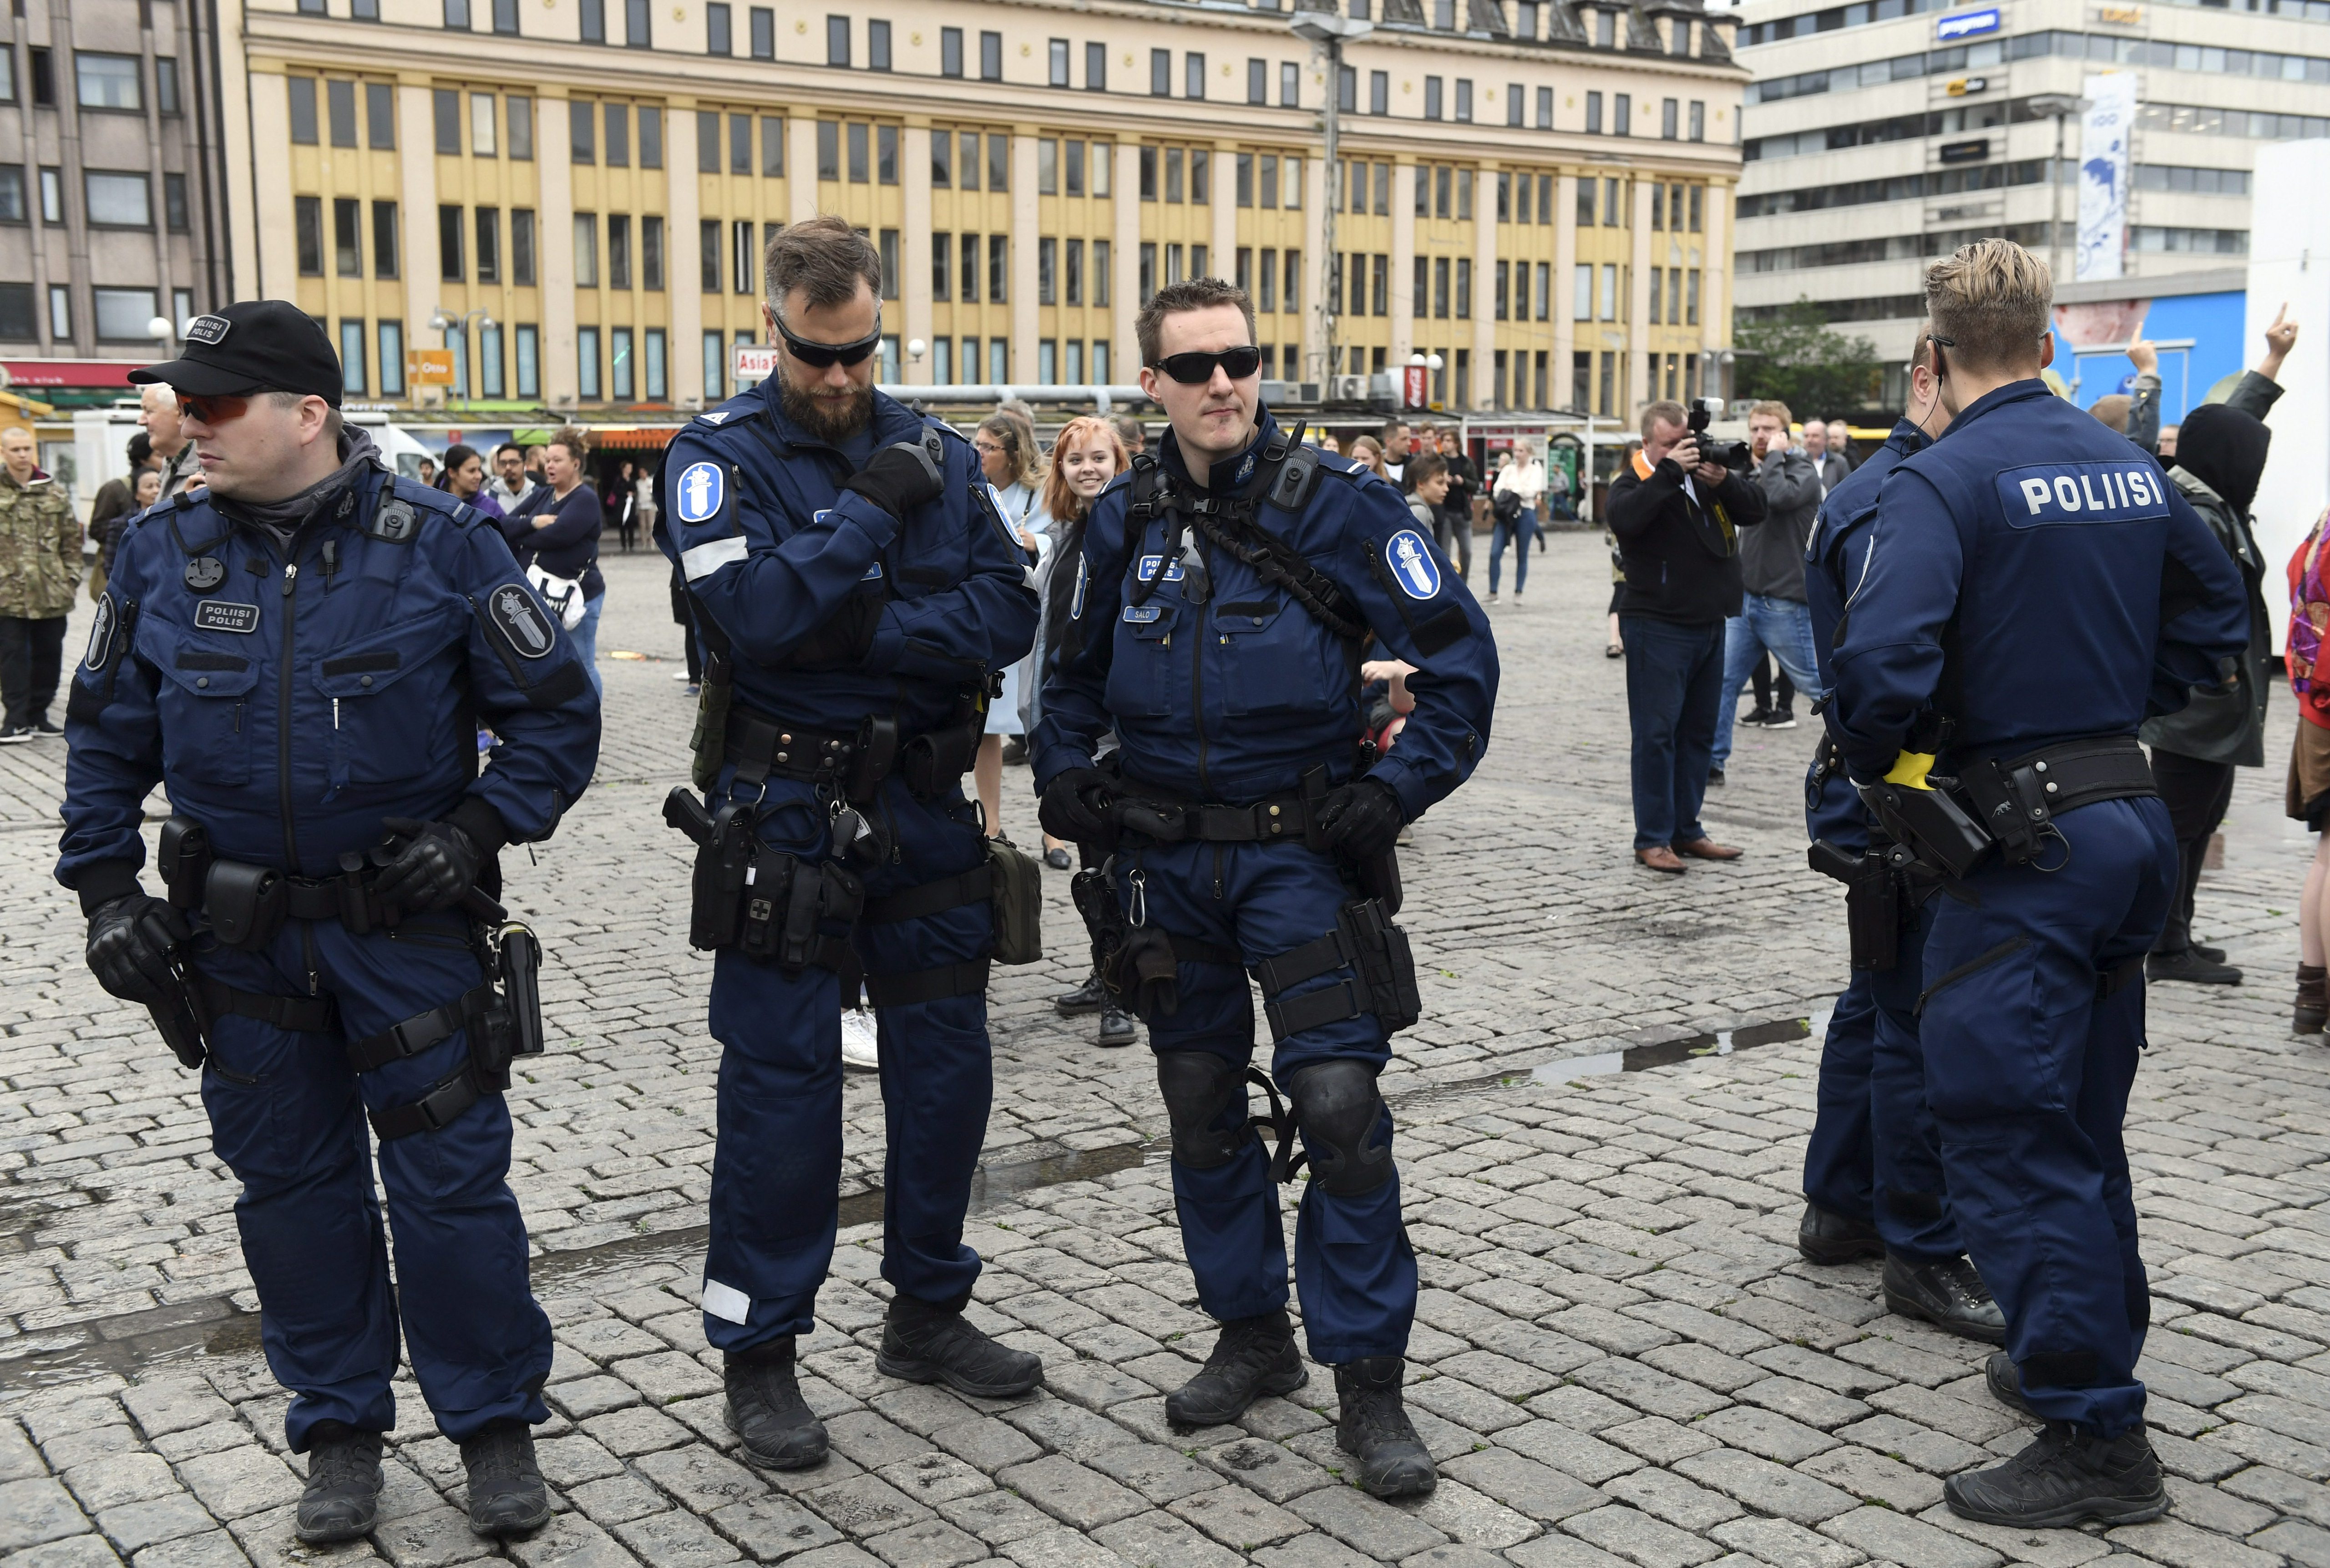 Finnish police patrol after fatal stabbing in Turku